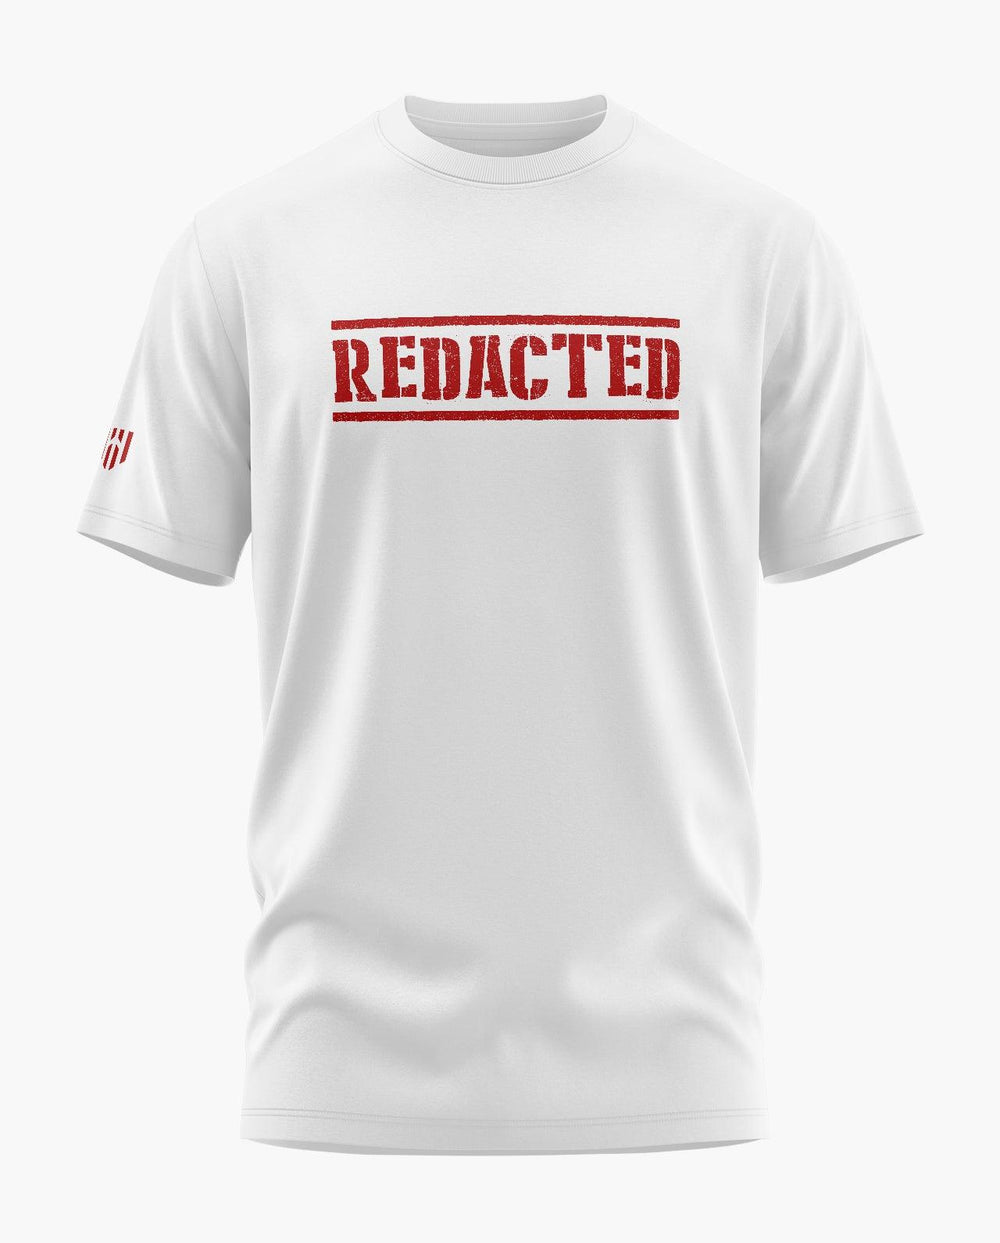 Redacted T-Shirt - Aero Armour